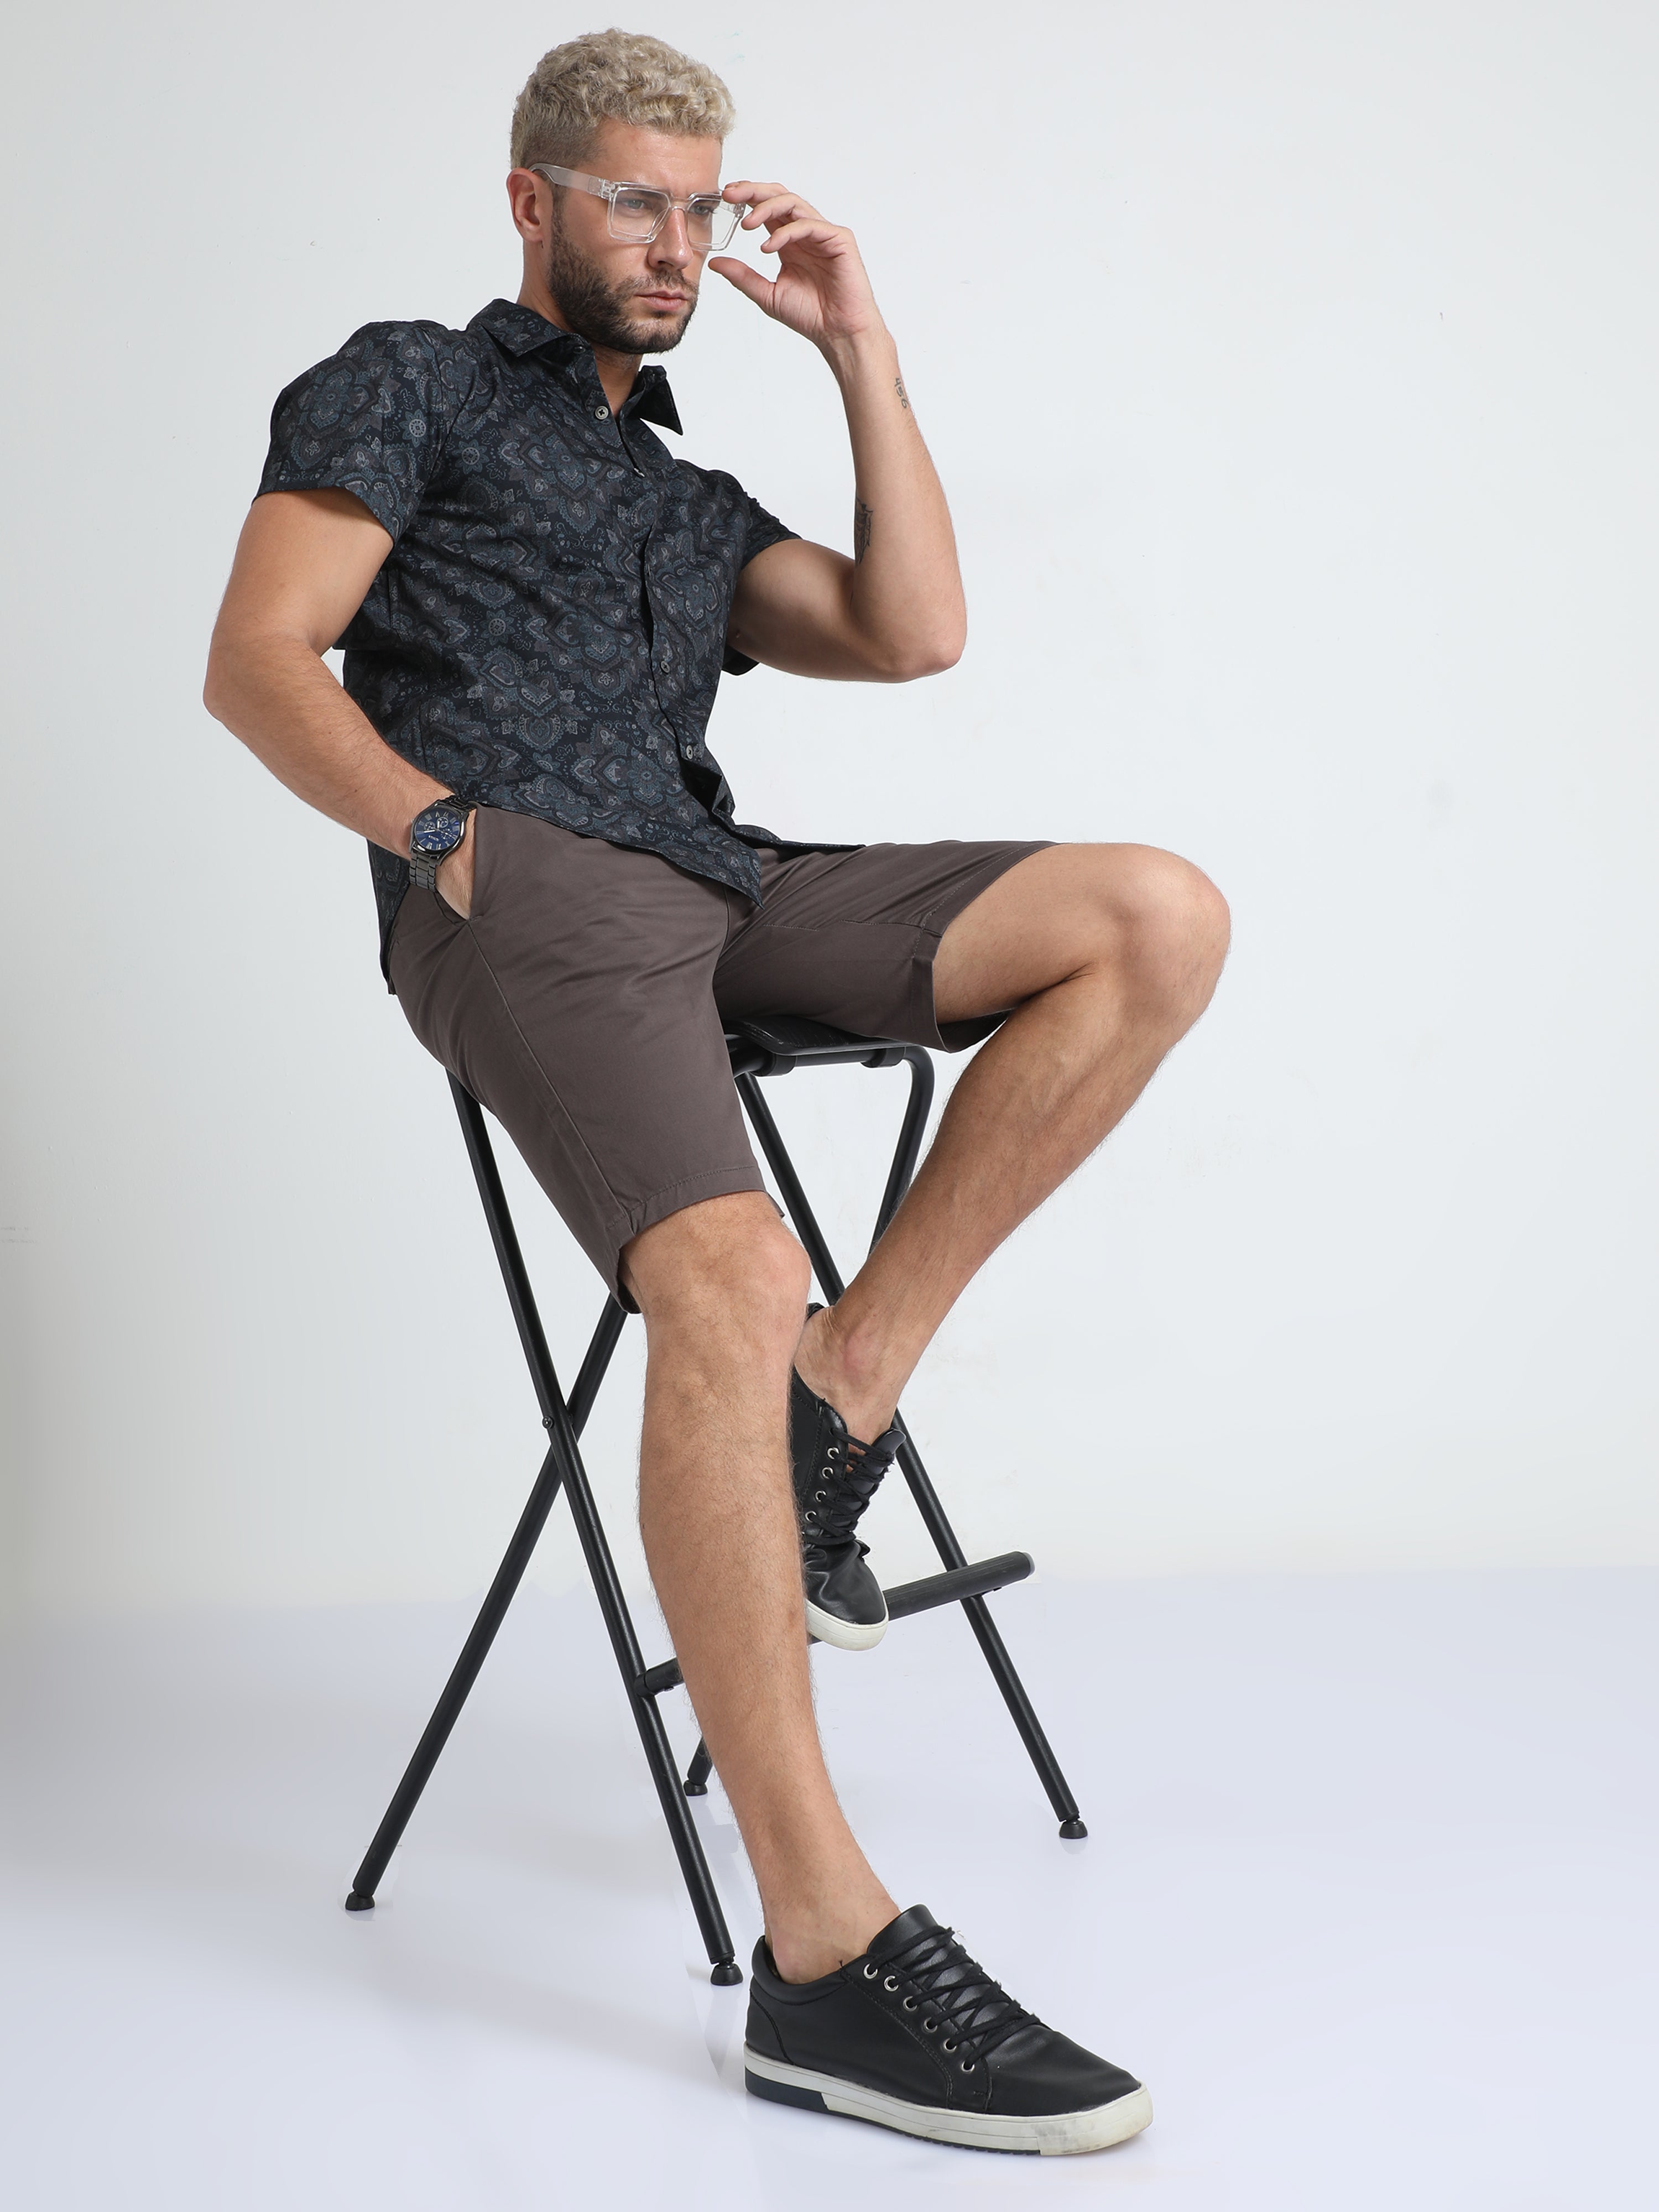 Modern Twill Dark Grey Shorts for Men 